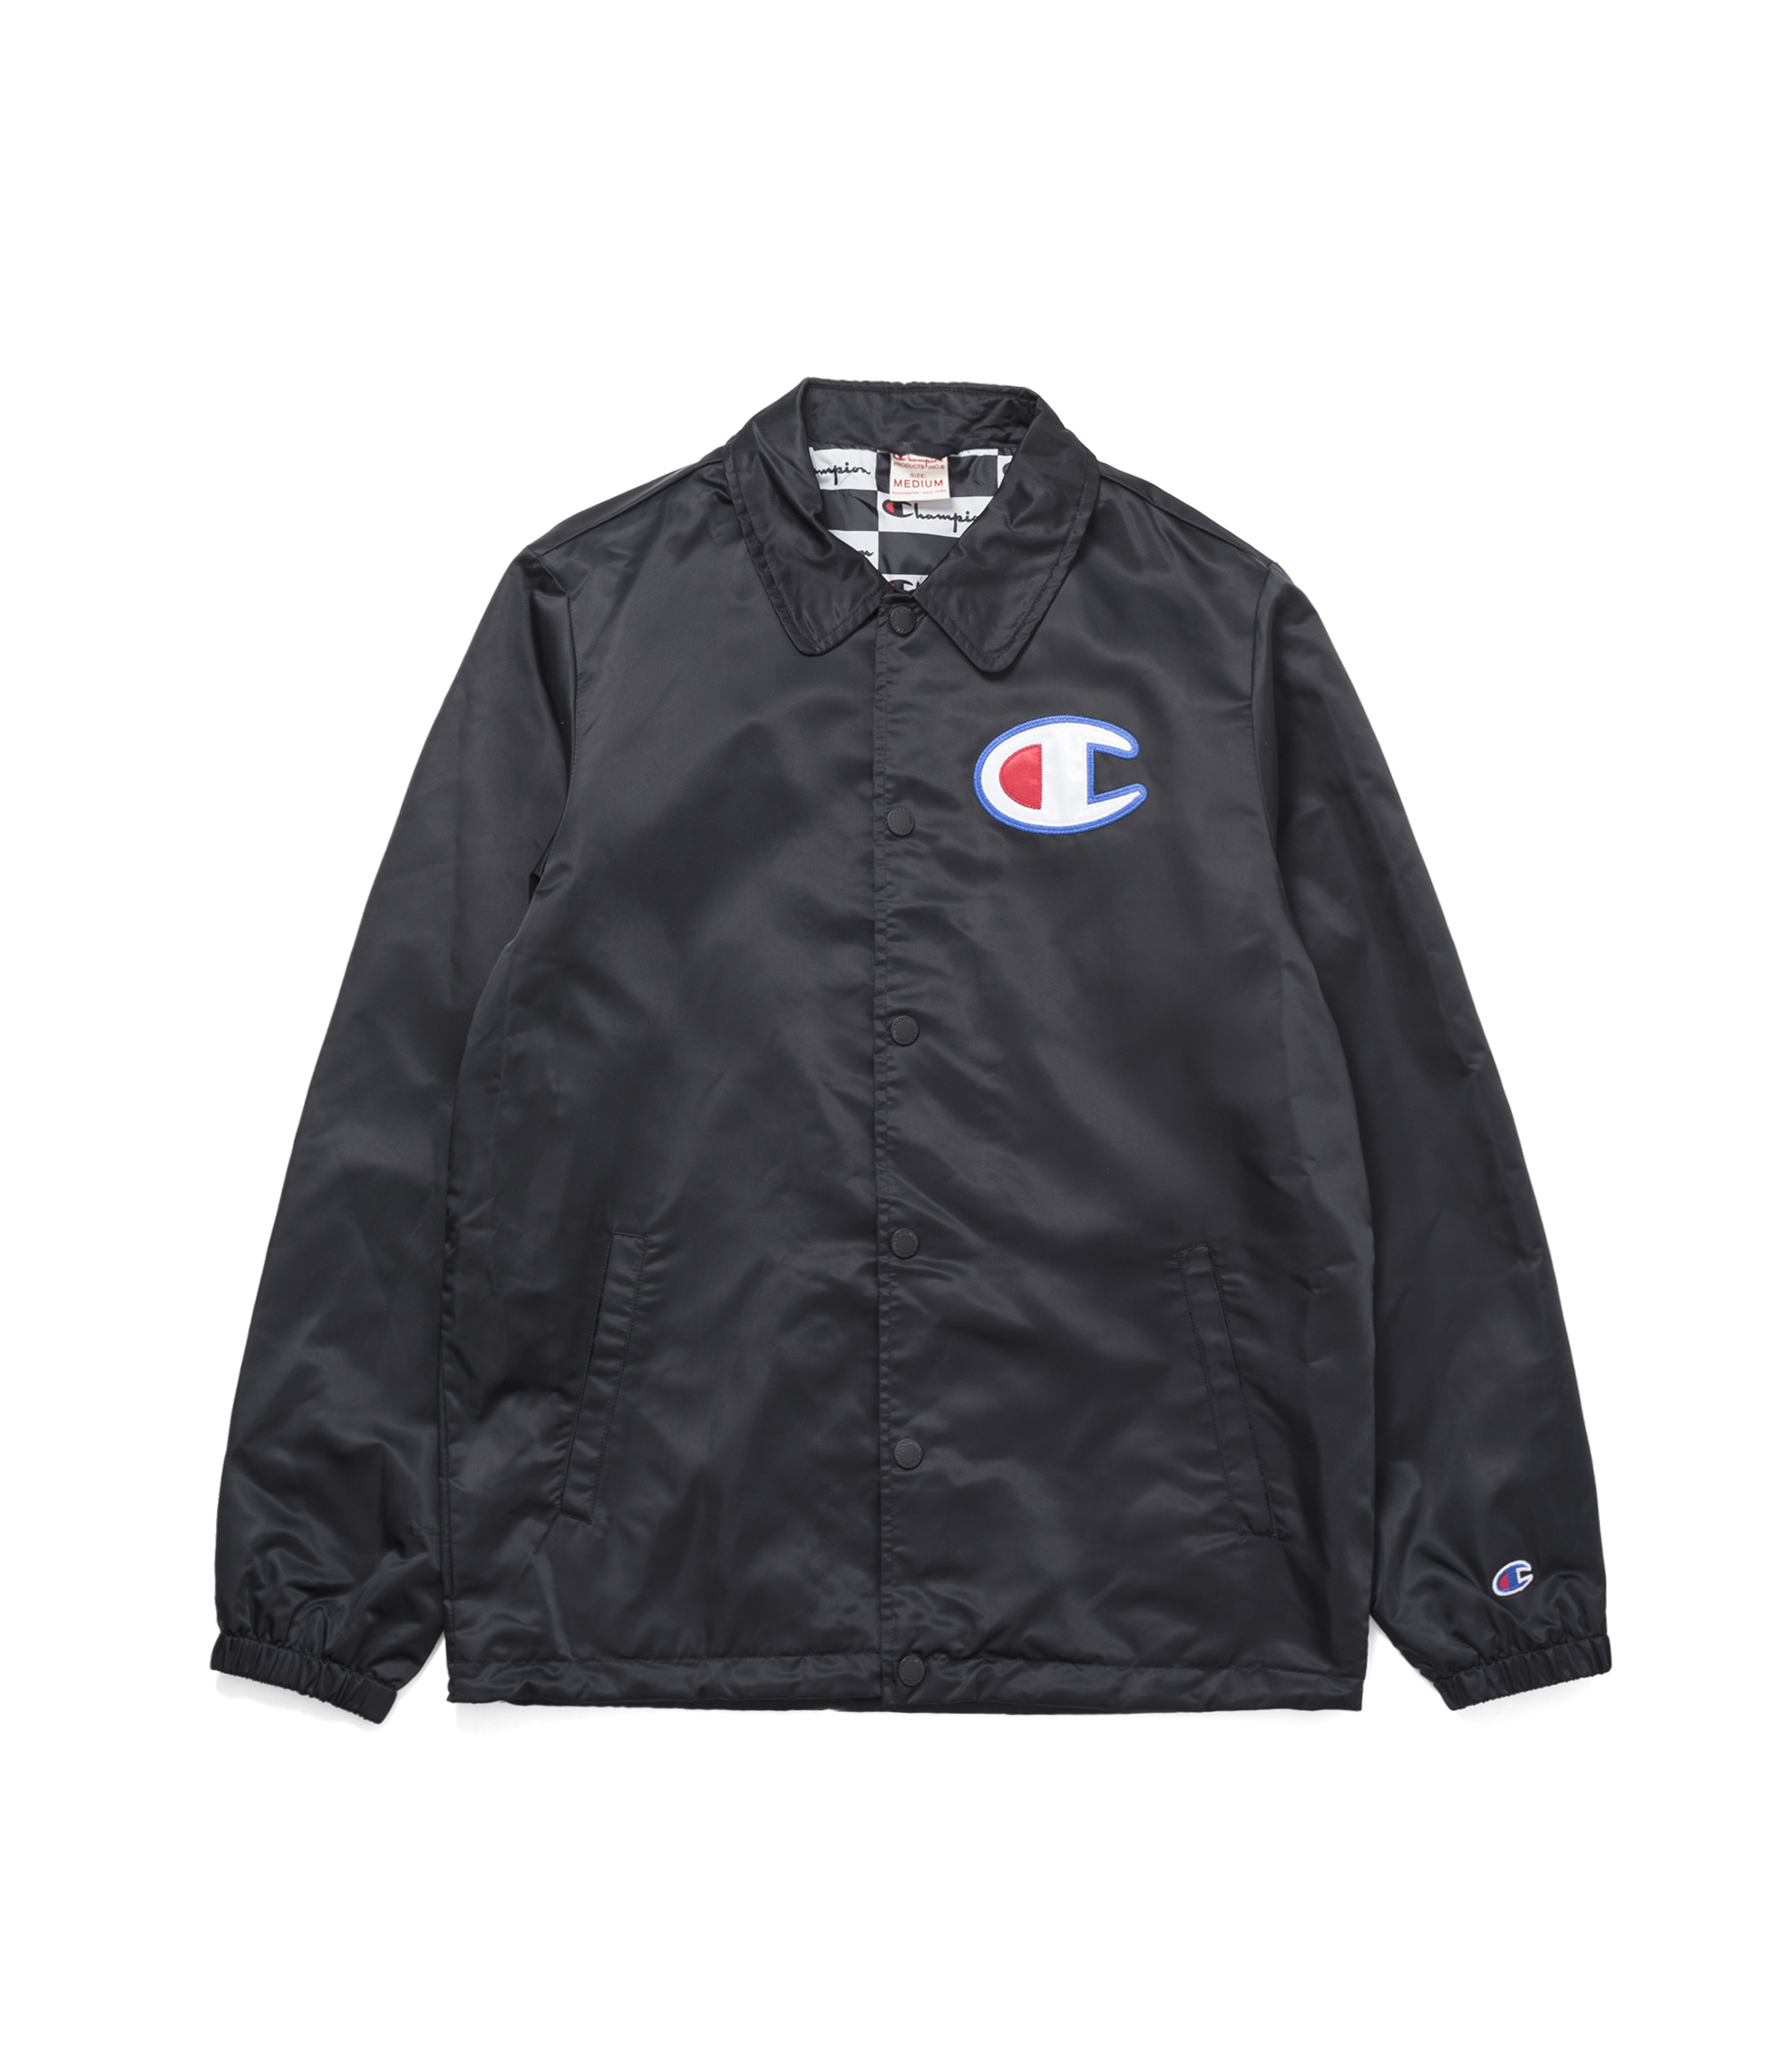 Shop Champion Coach Jacket C Logo Black at itk online store